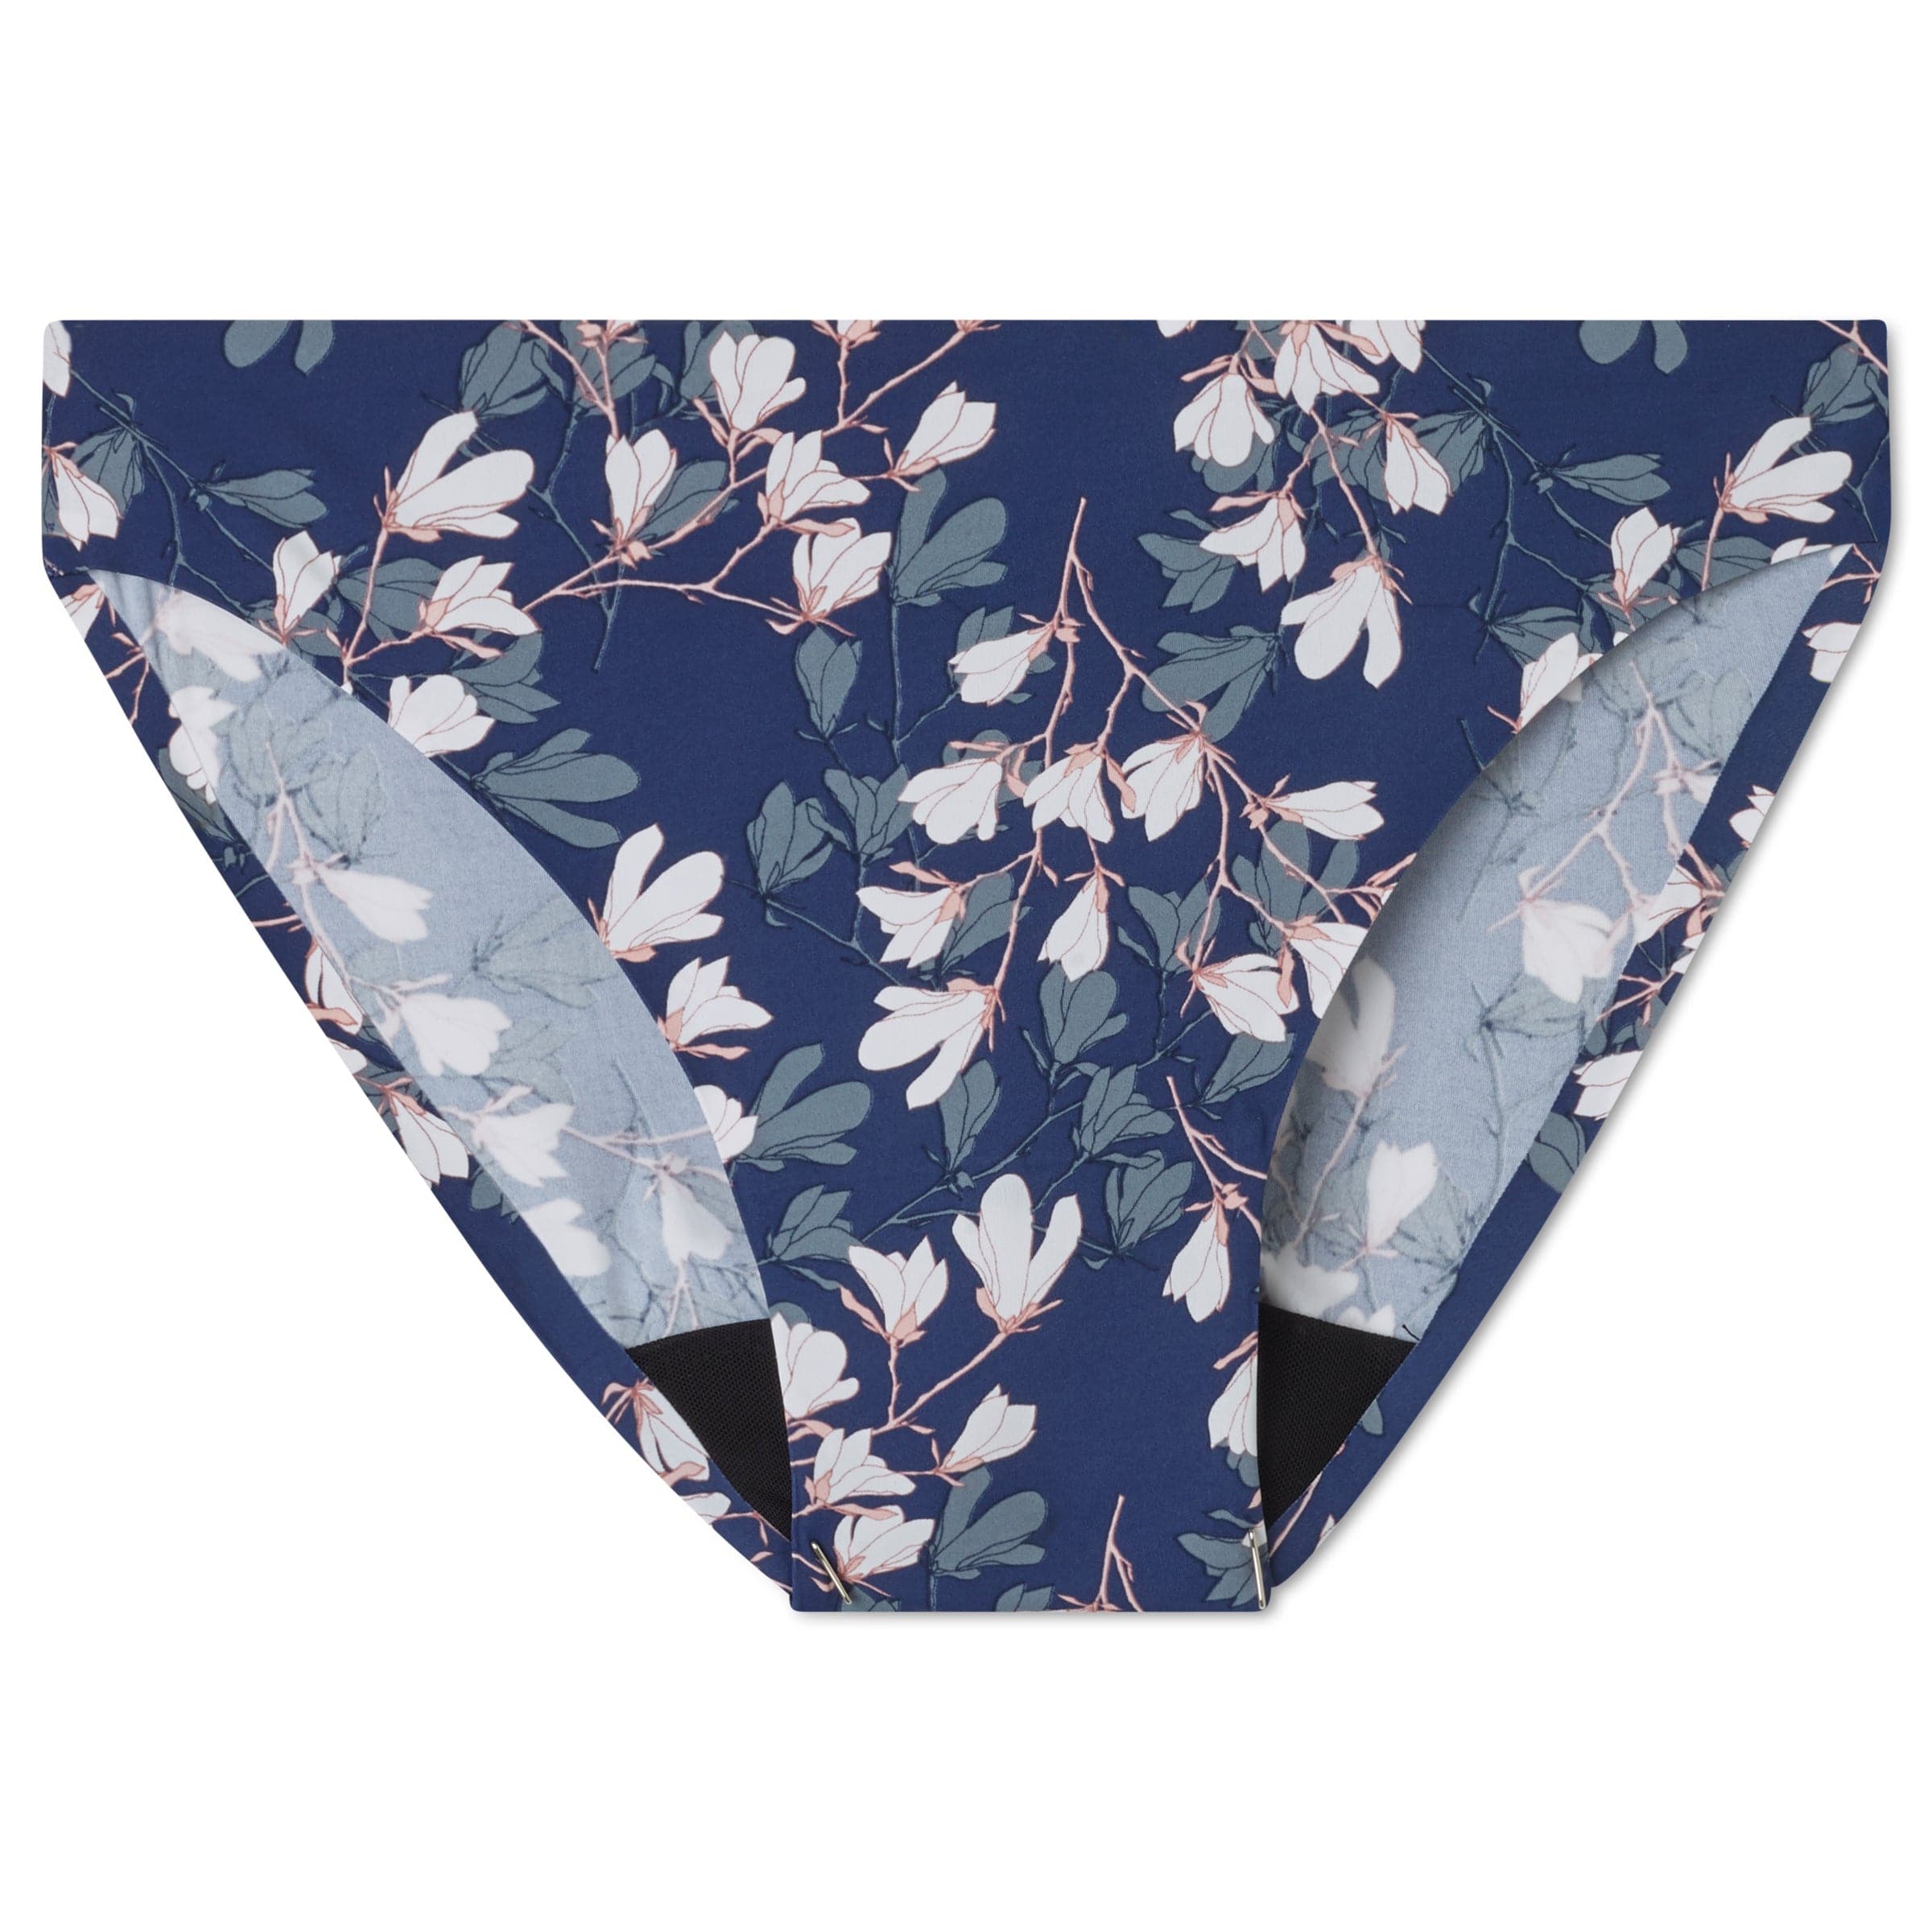 Period Underwear - Bikini, Floral